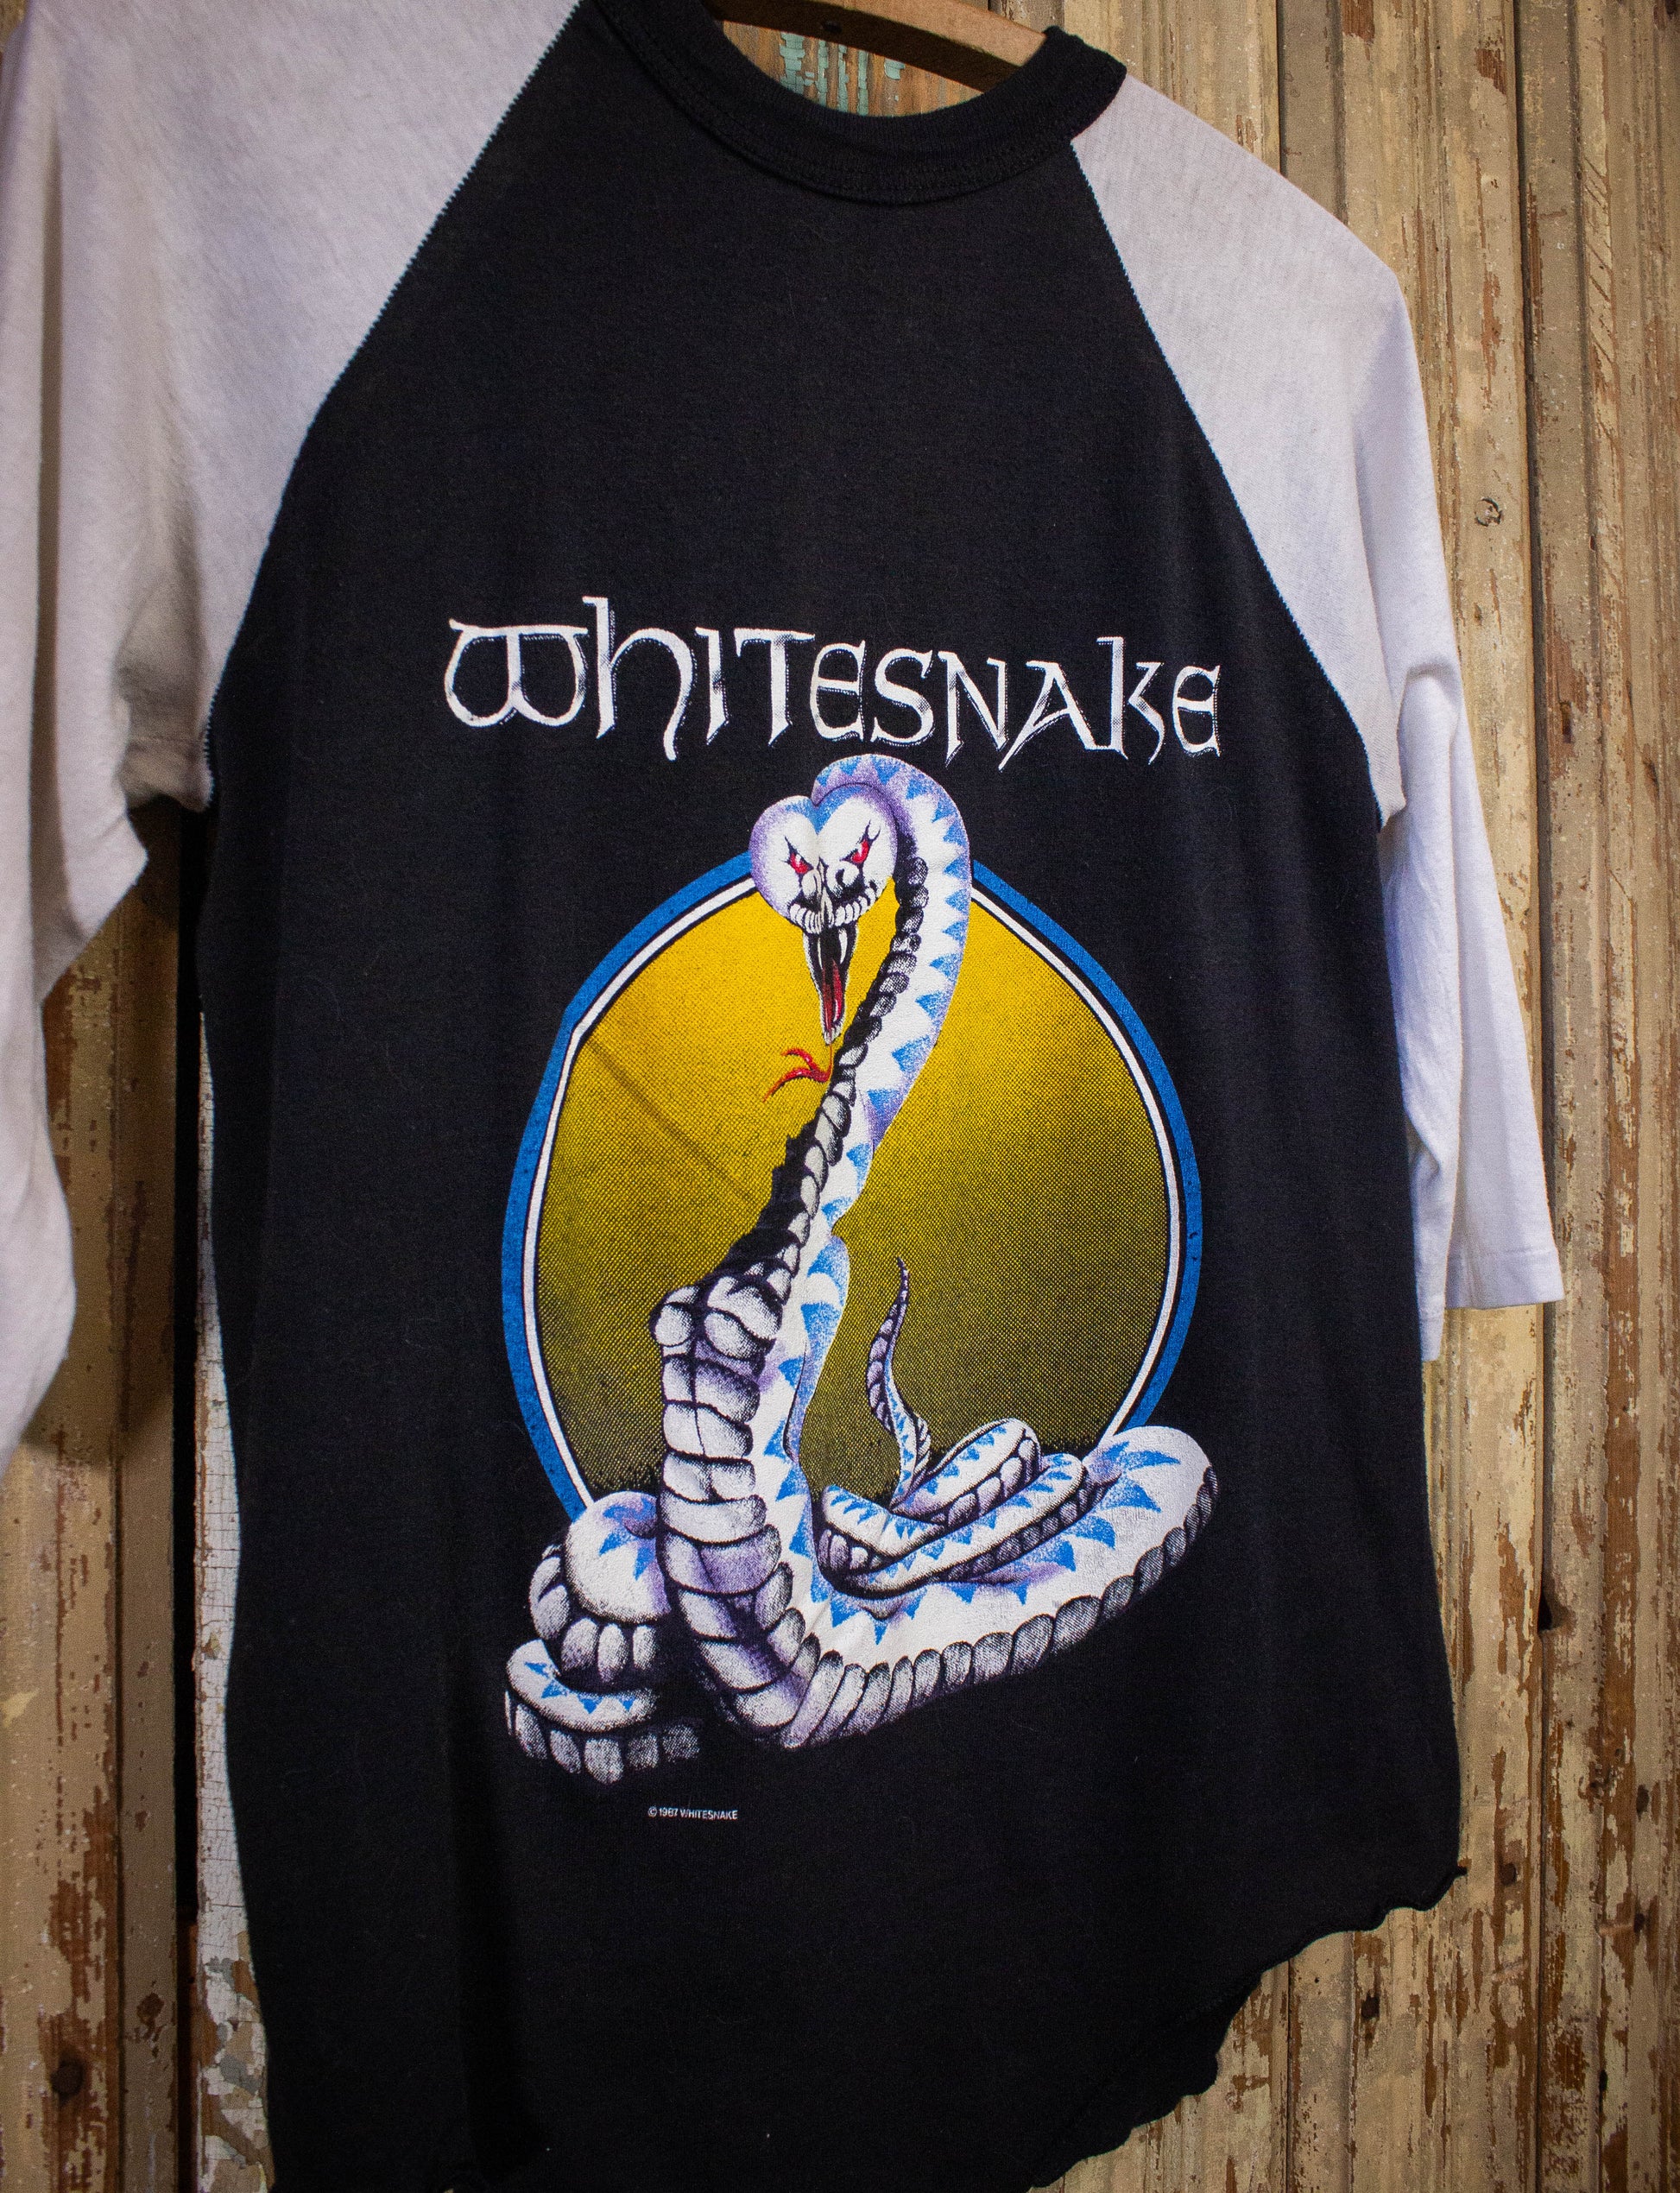 Vintage Whitesnake Tour Raglan Concert T Shirt 1987 White/Black Small